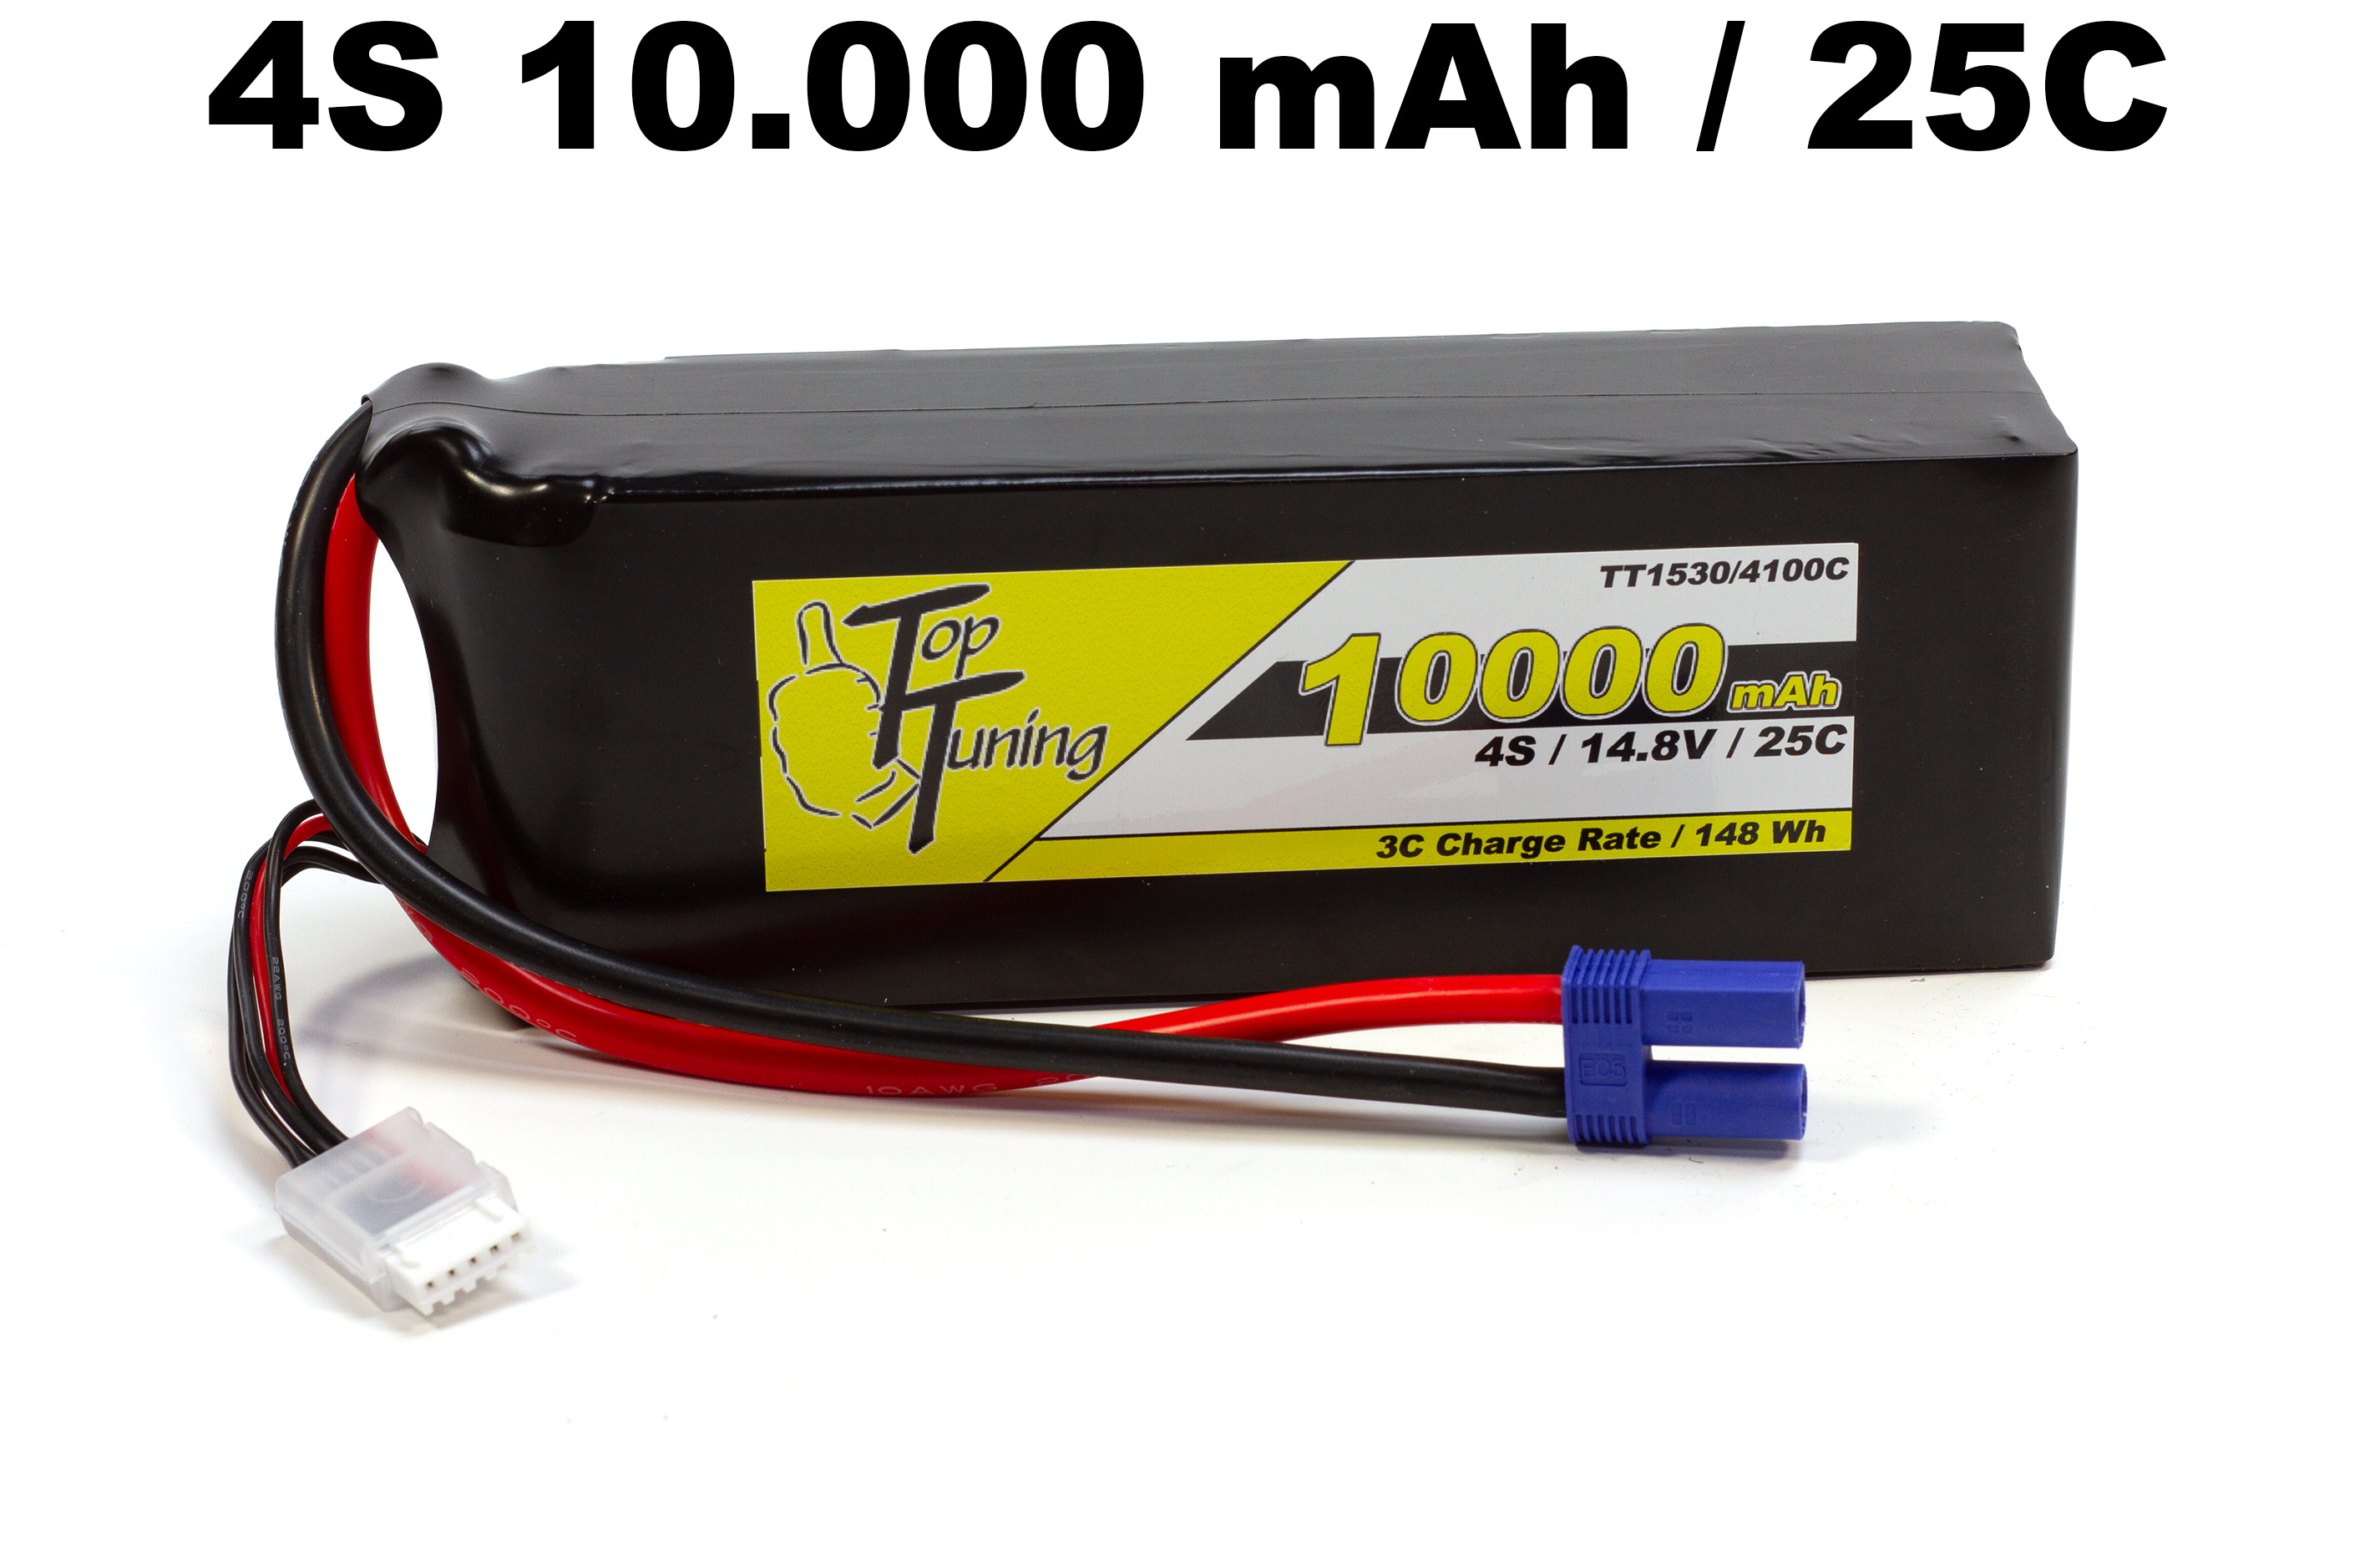 TT1530/4100C Top Tuning 10000 mAh LiPo battery 4S, 14,8V Offer